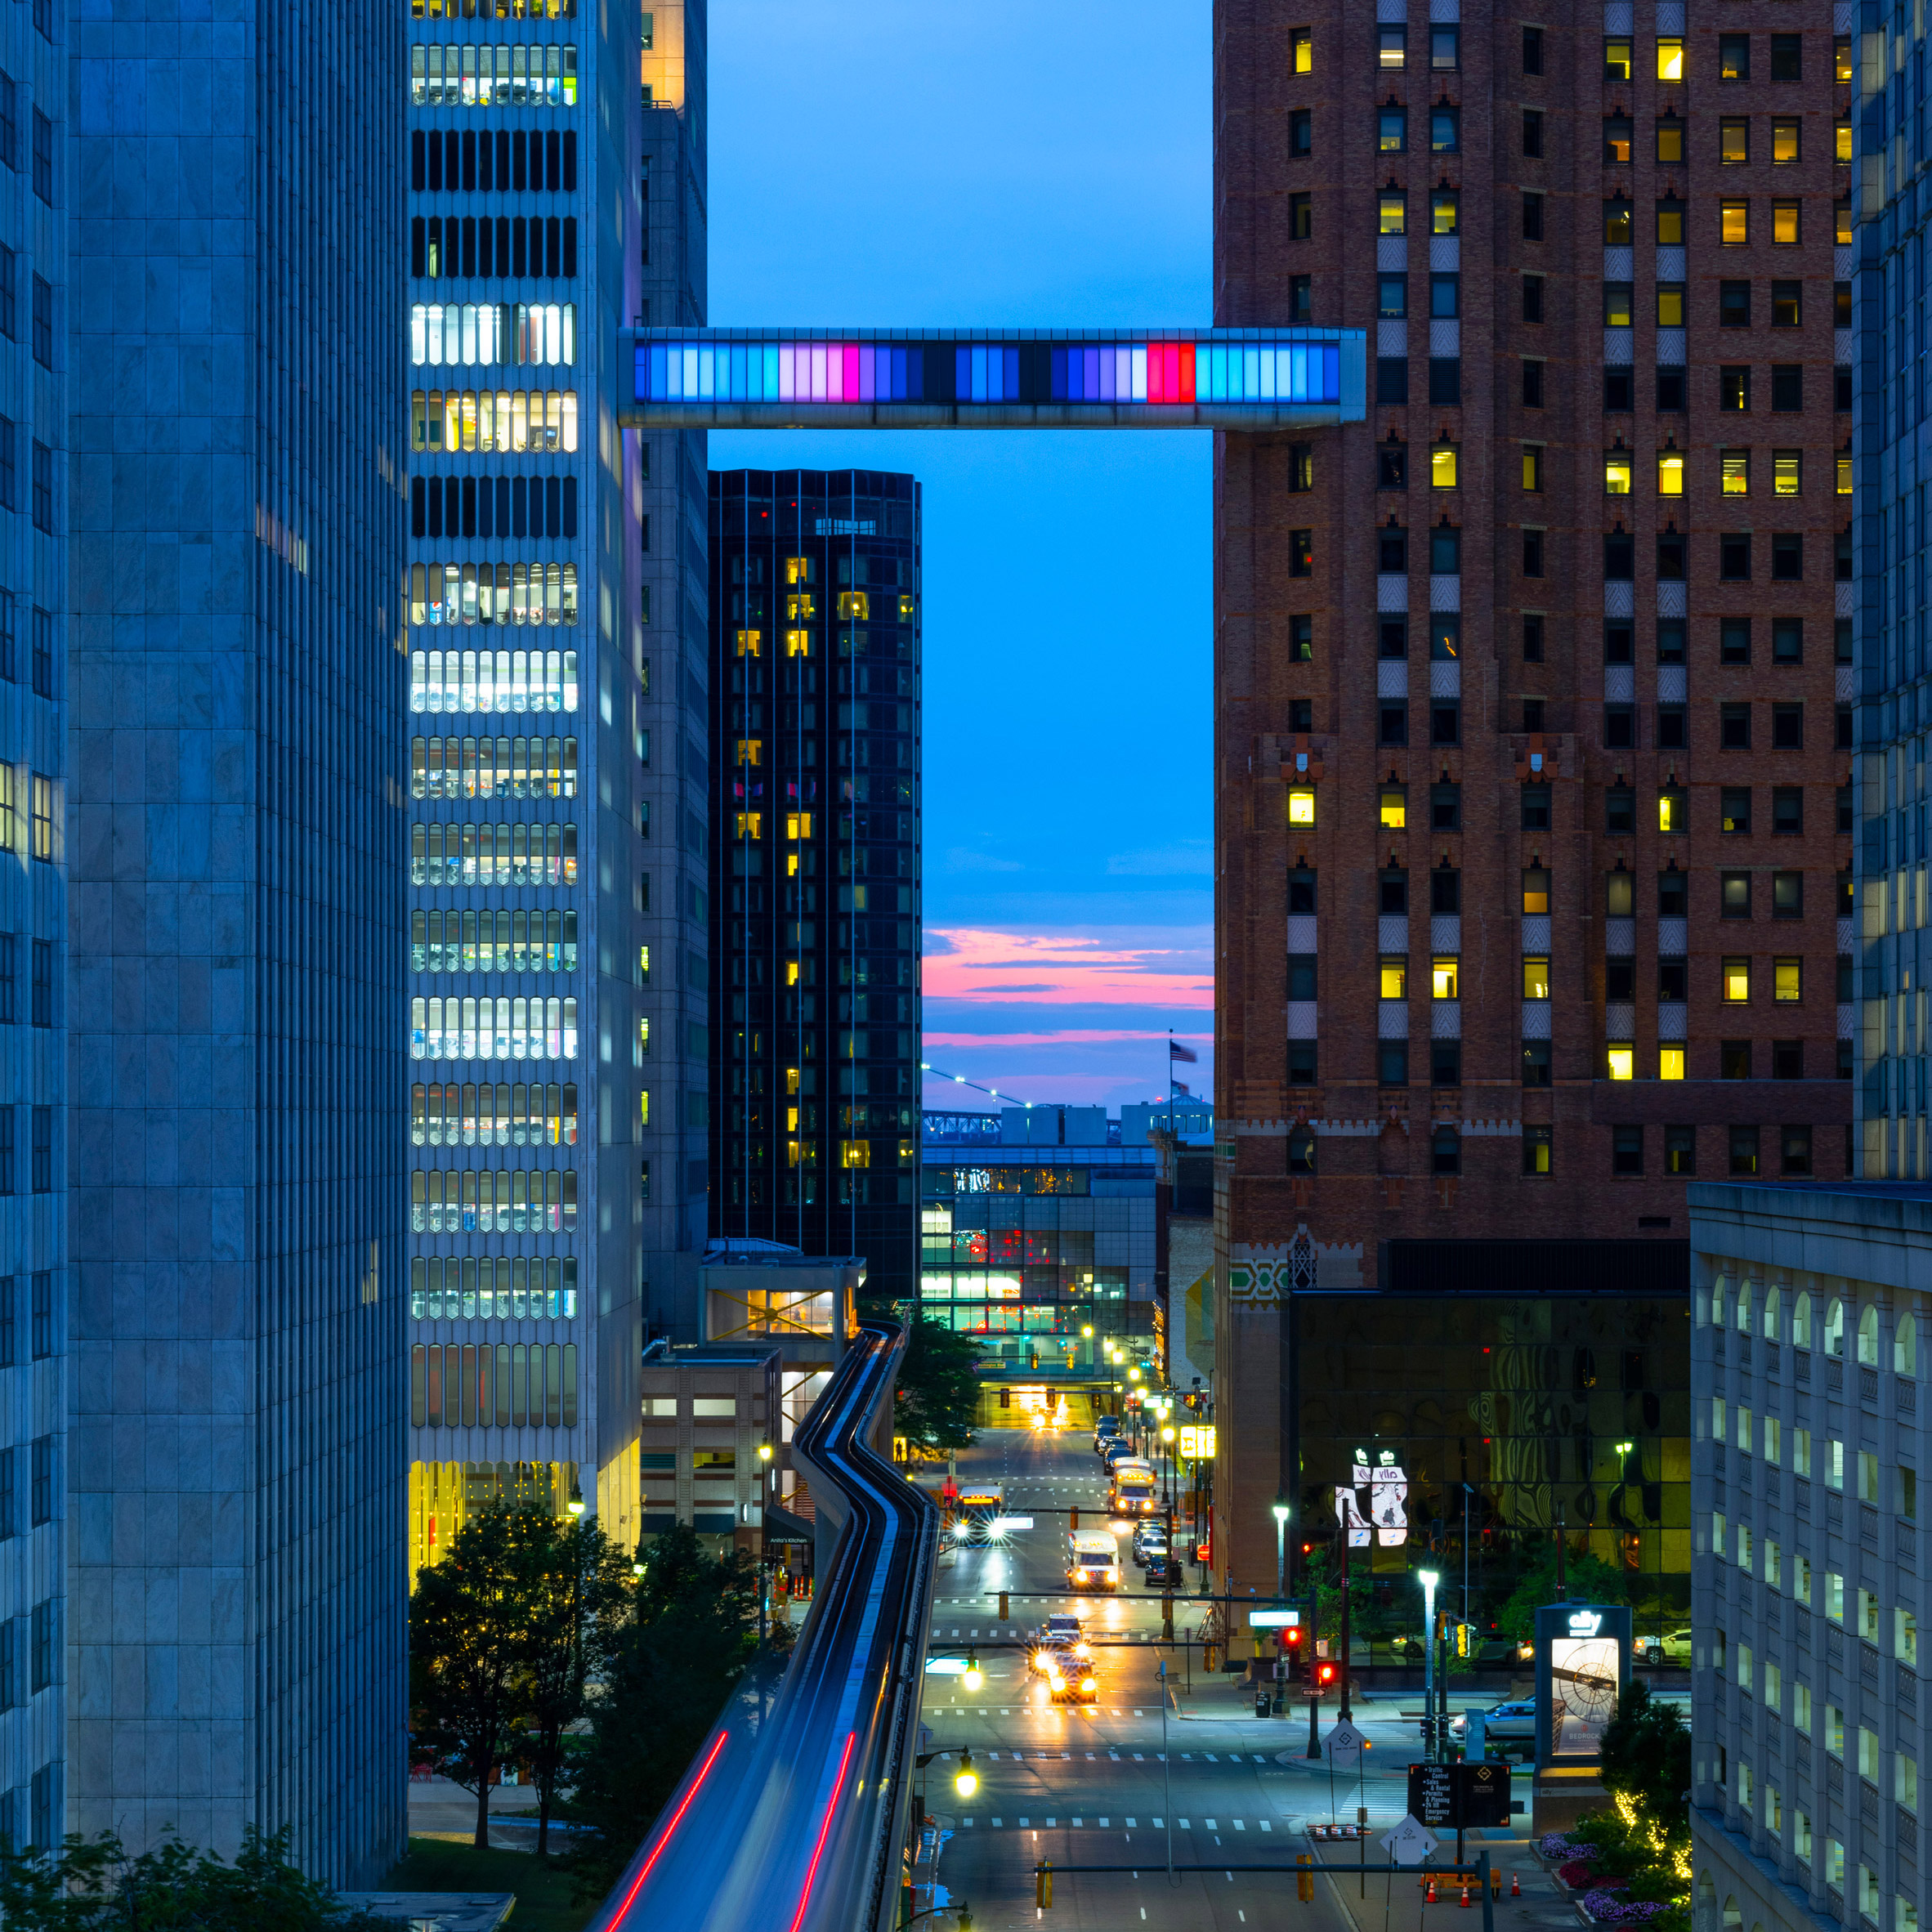 Phillip K Smith III's Detroit Skybridge glows with blocks of colour